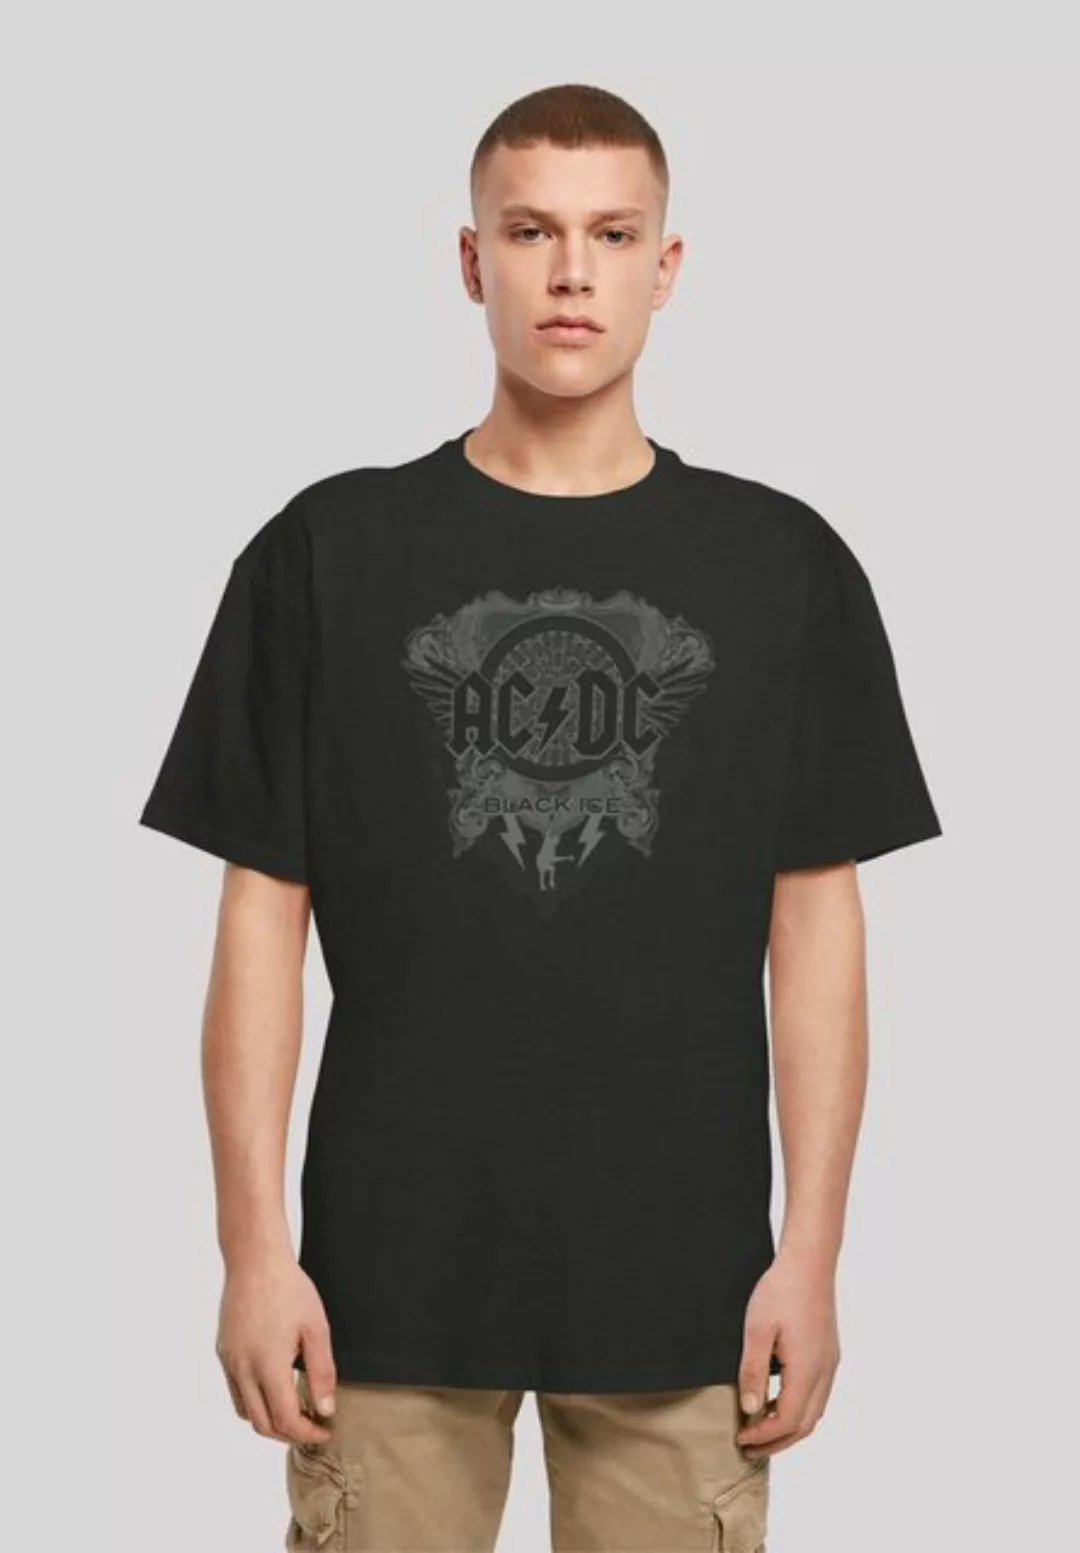 F4NT4STIC T-Shirt ACDC Rock Band Black Ice Print günstig online kaufen